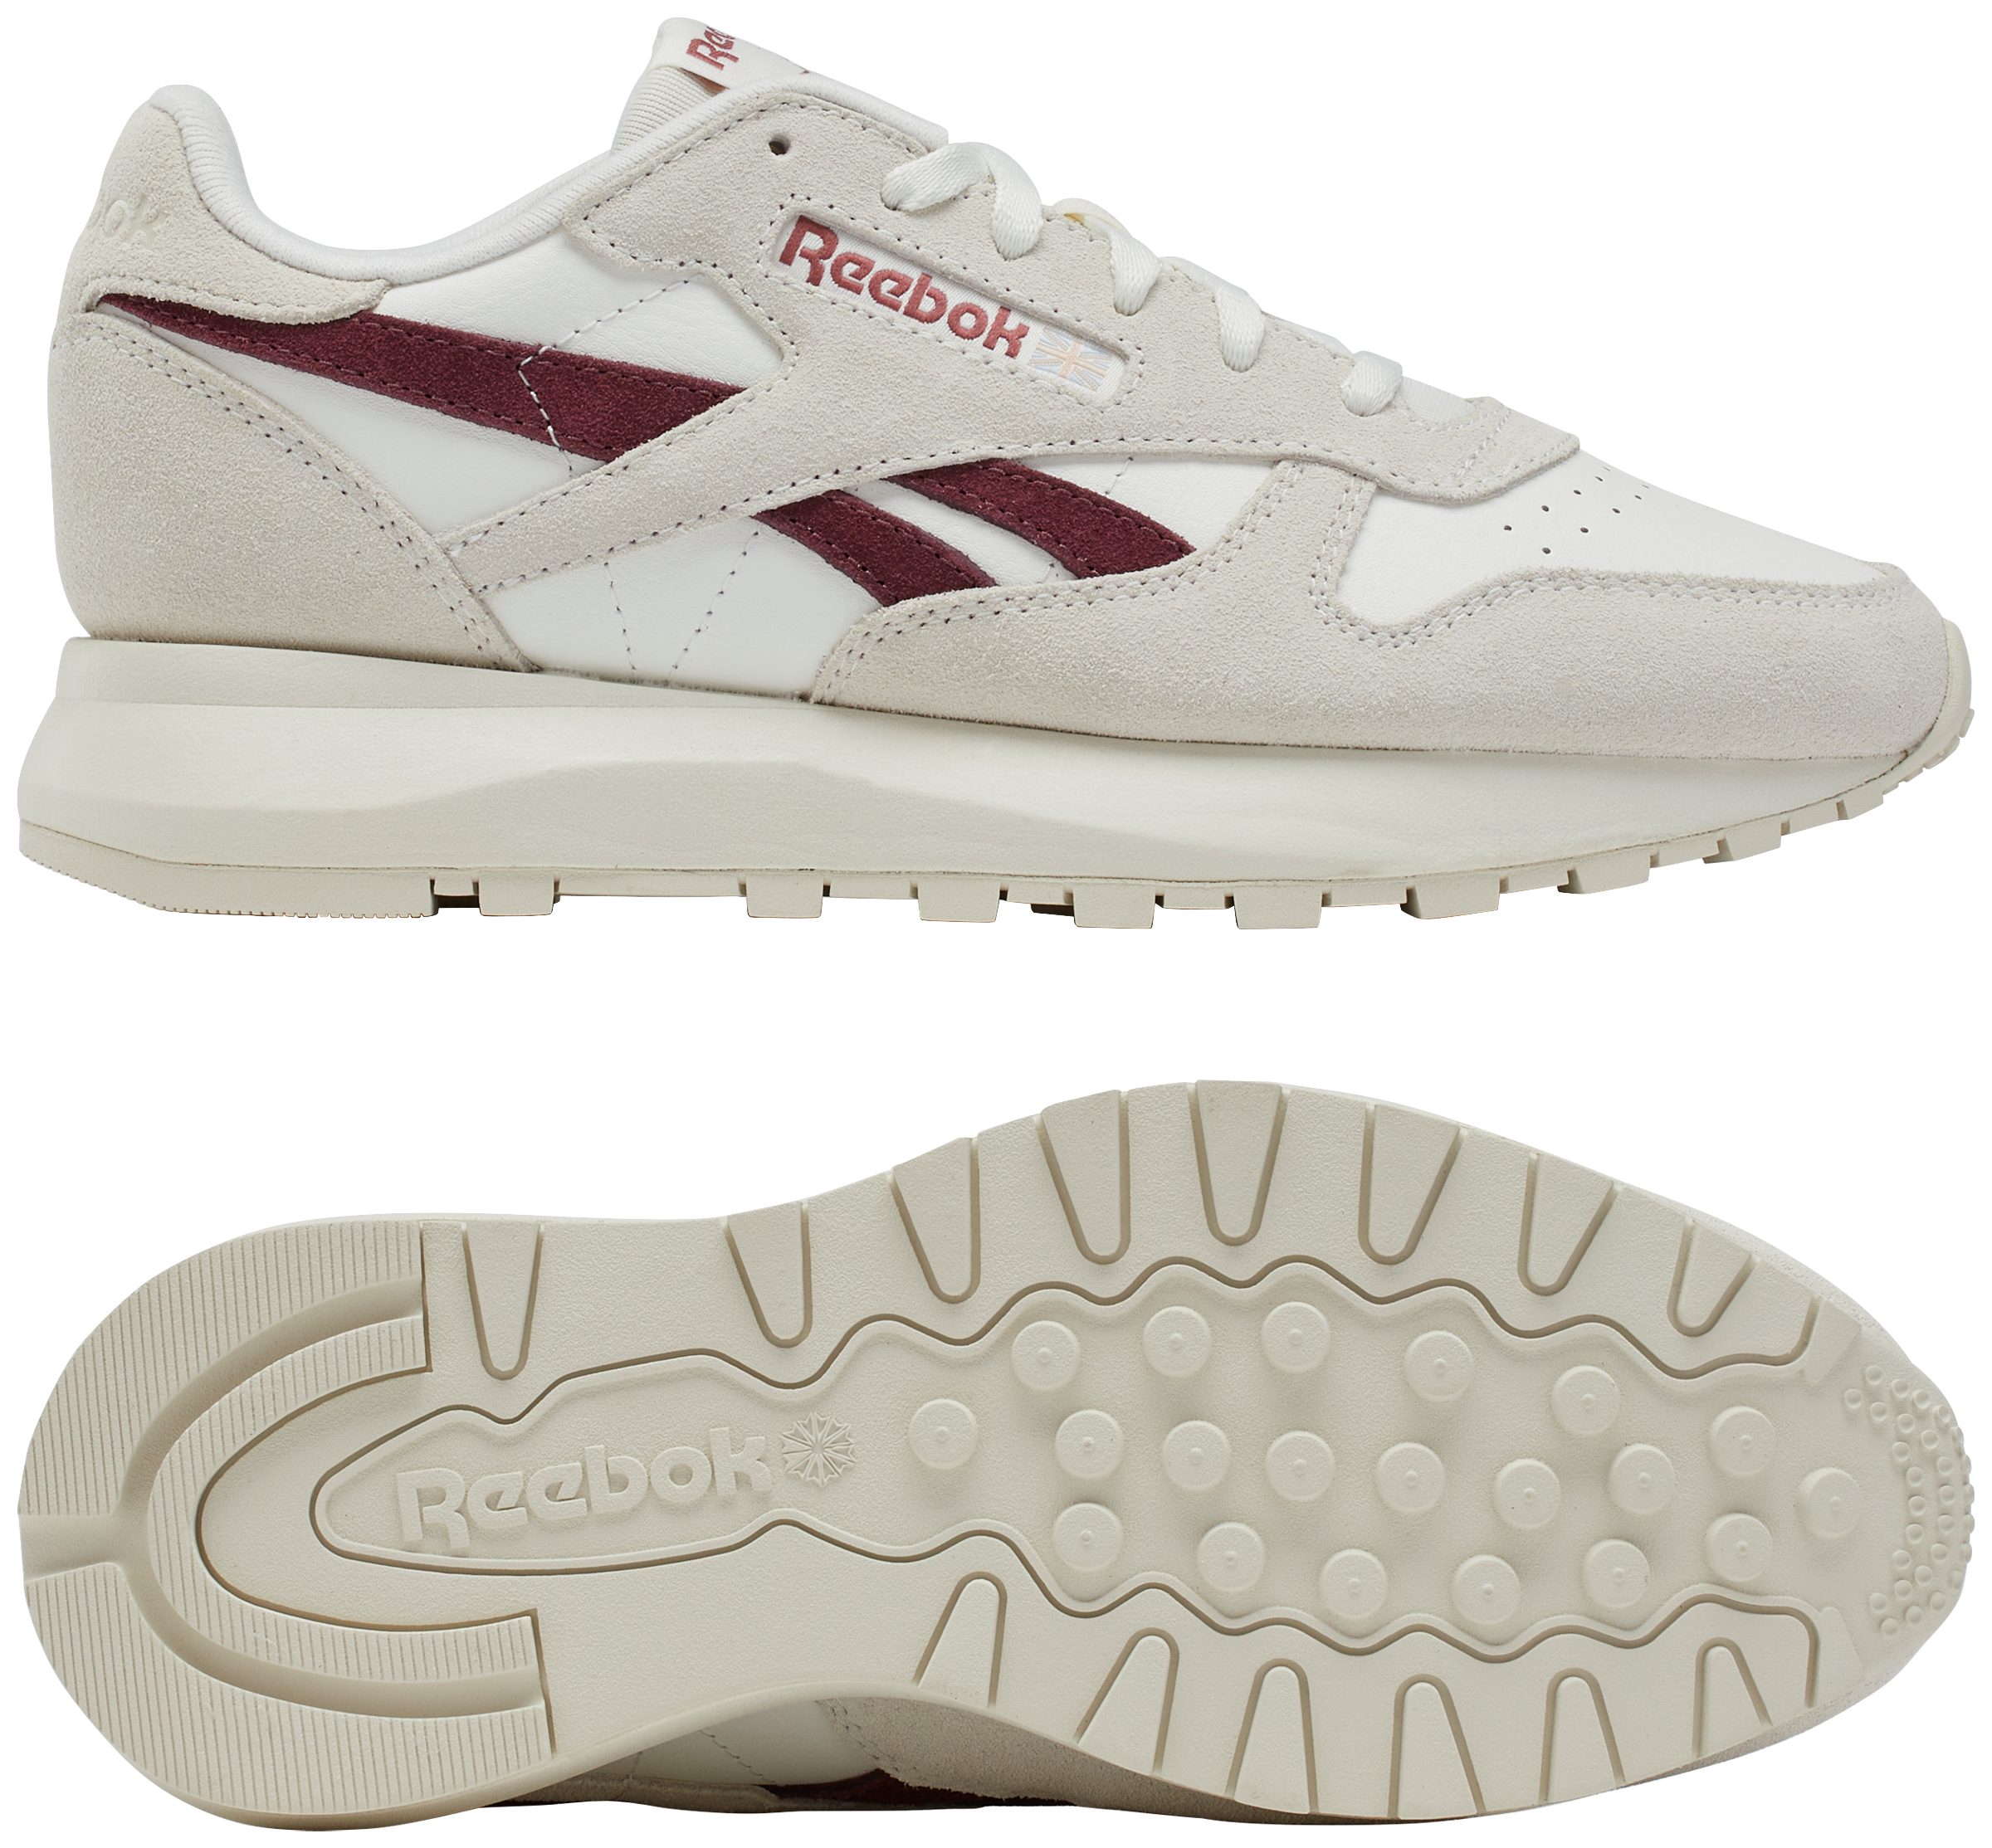 Reebok Classic CLASSIC LEATHER grau-bordeaux SP Sneaker